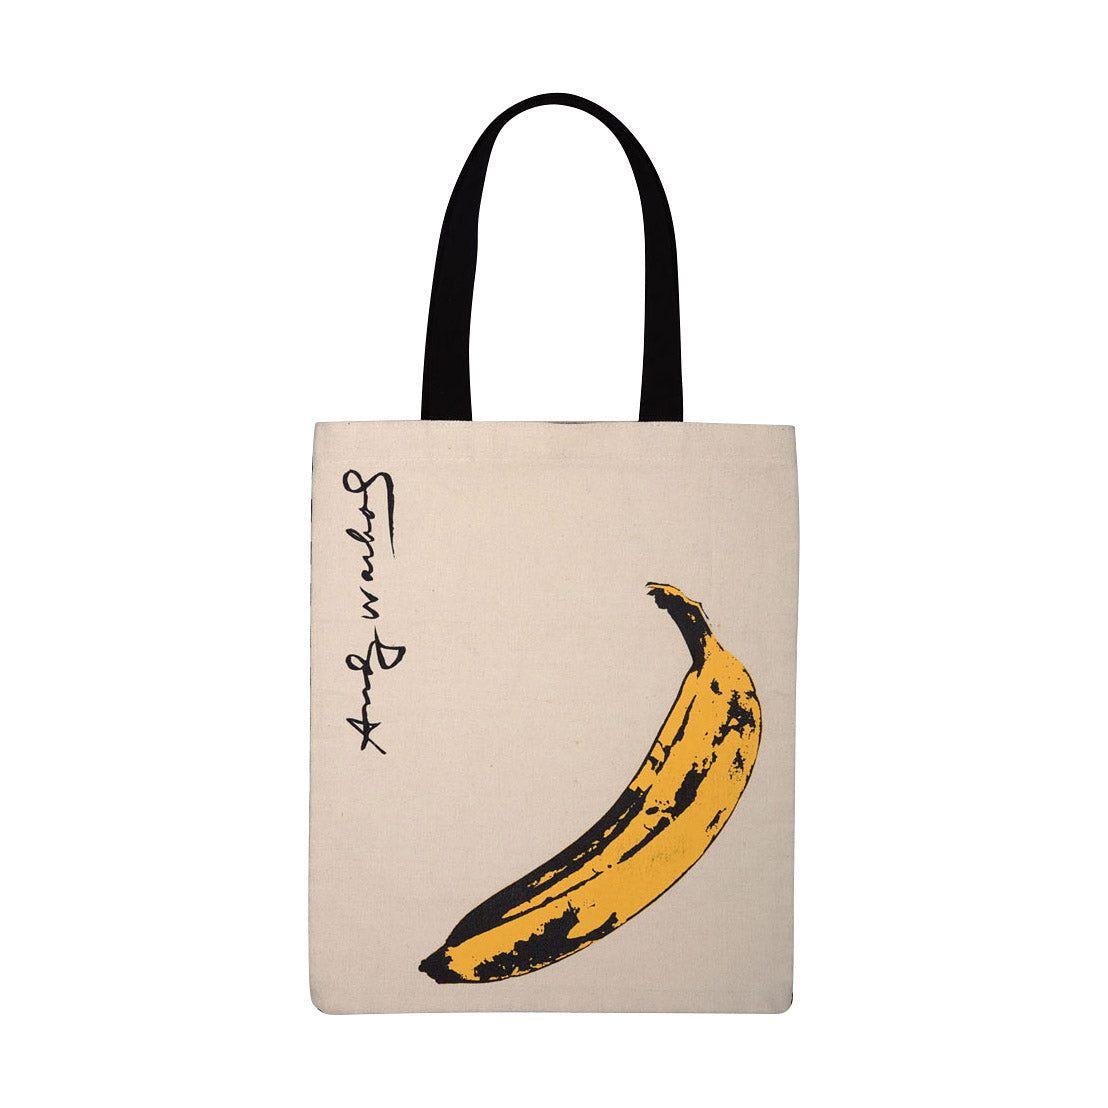 Andy Warhol Cotton Canvas Tote Bag - Banana – MoMA Design Store